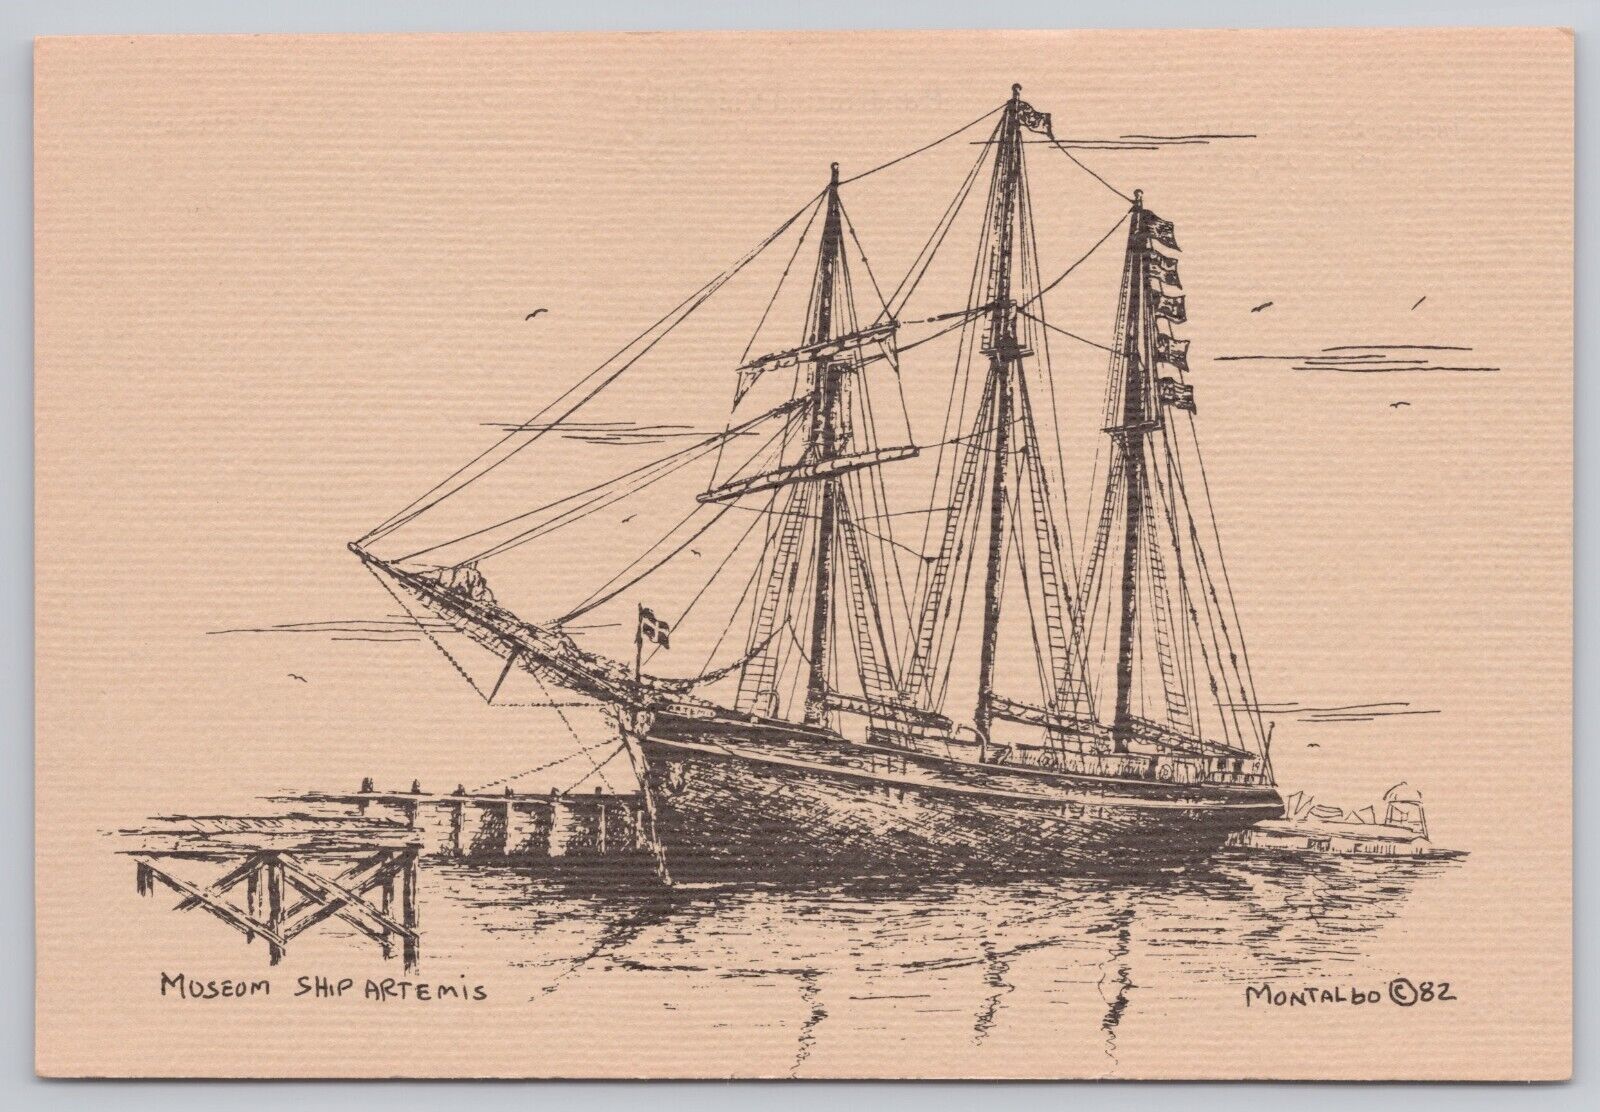 Gulfport Mississippi, Museum Ship Artemis by Phil Montalbo, Vintage Postcard